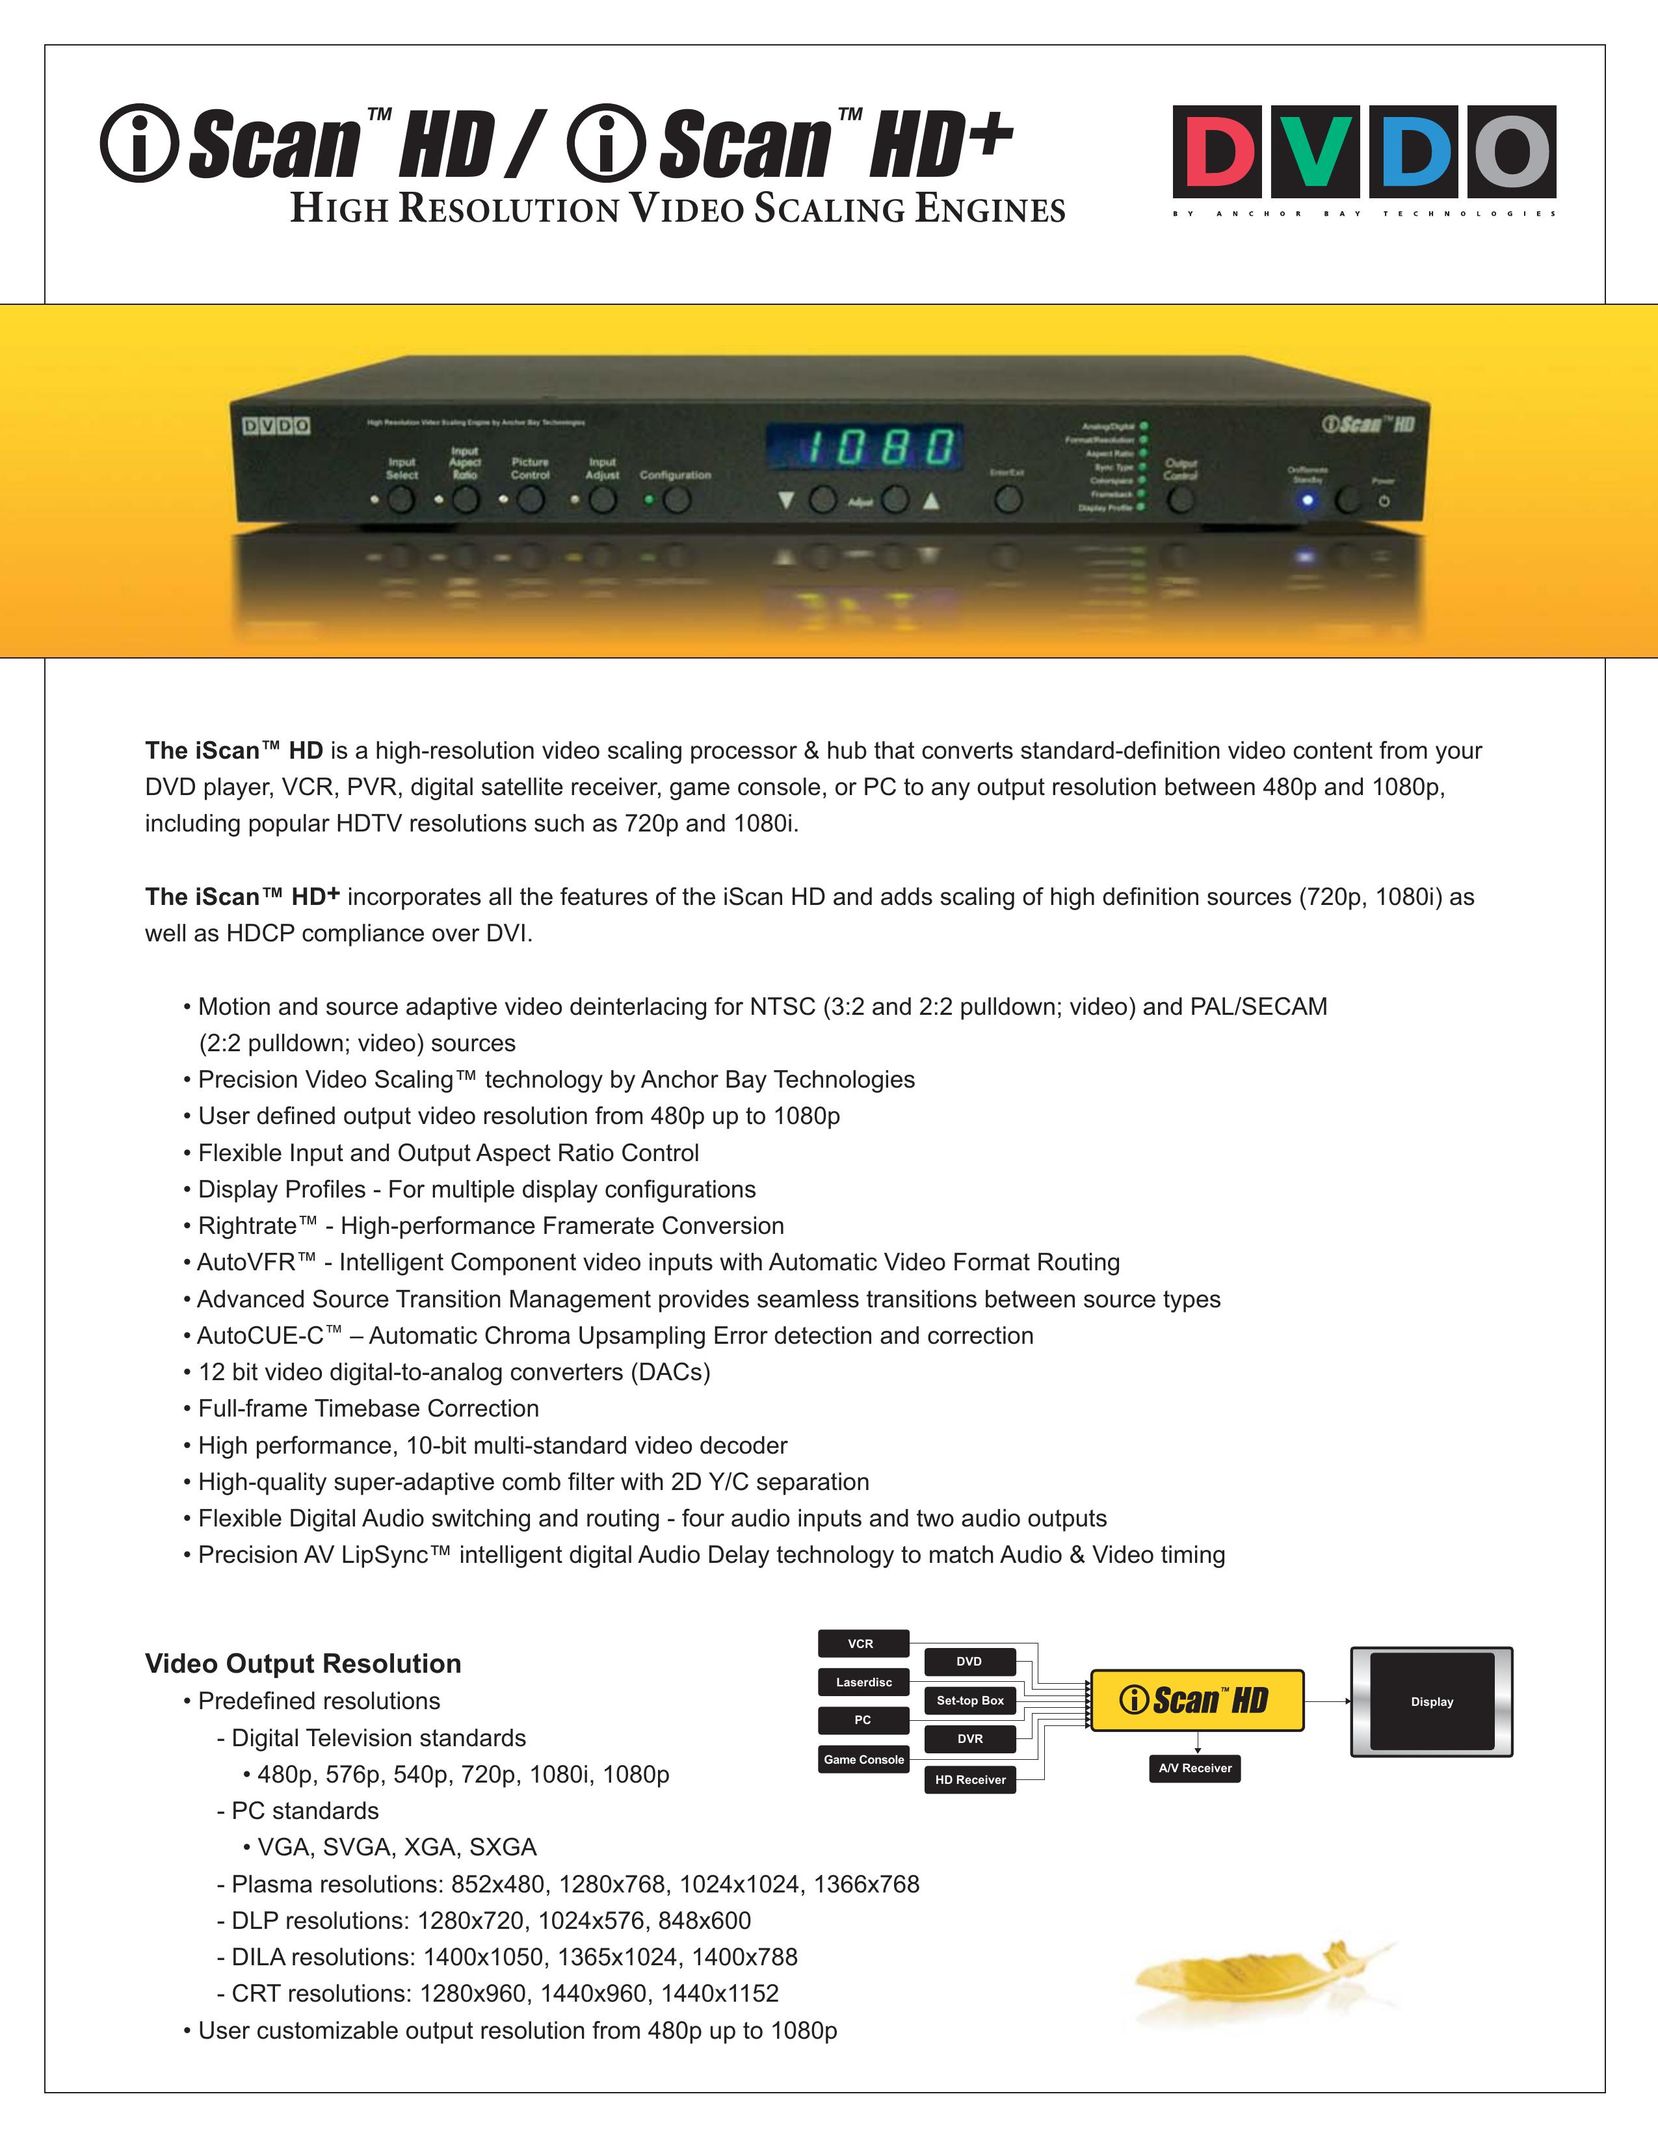 DVDO 9835-2K TV Converter Box User Manual